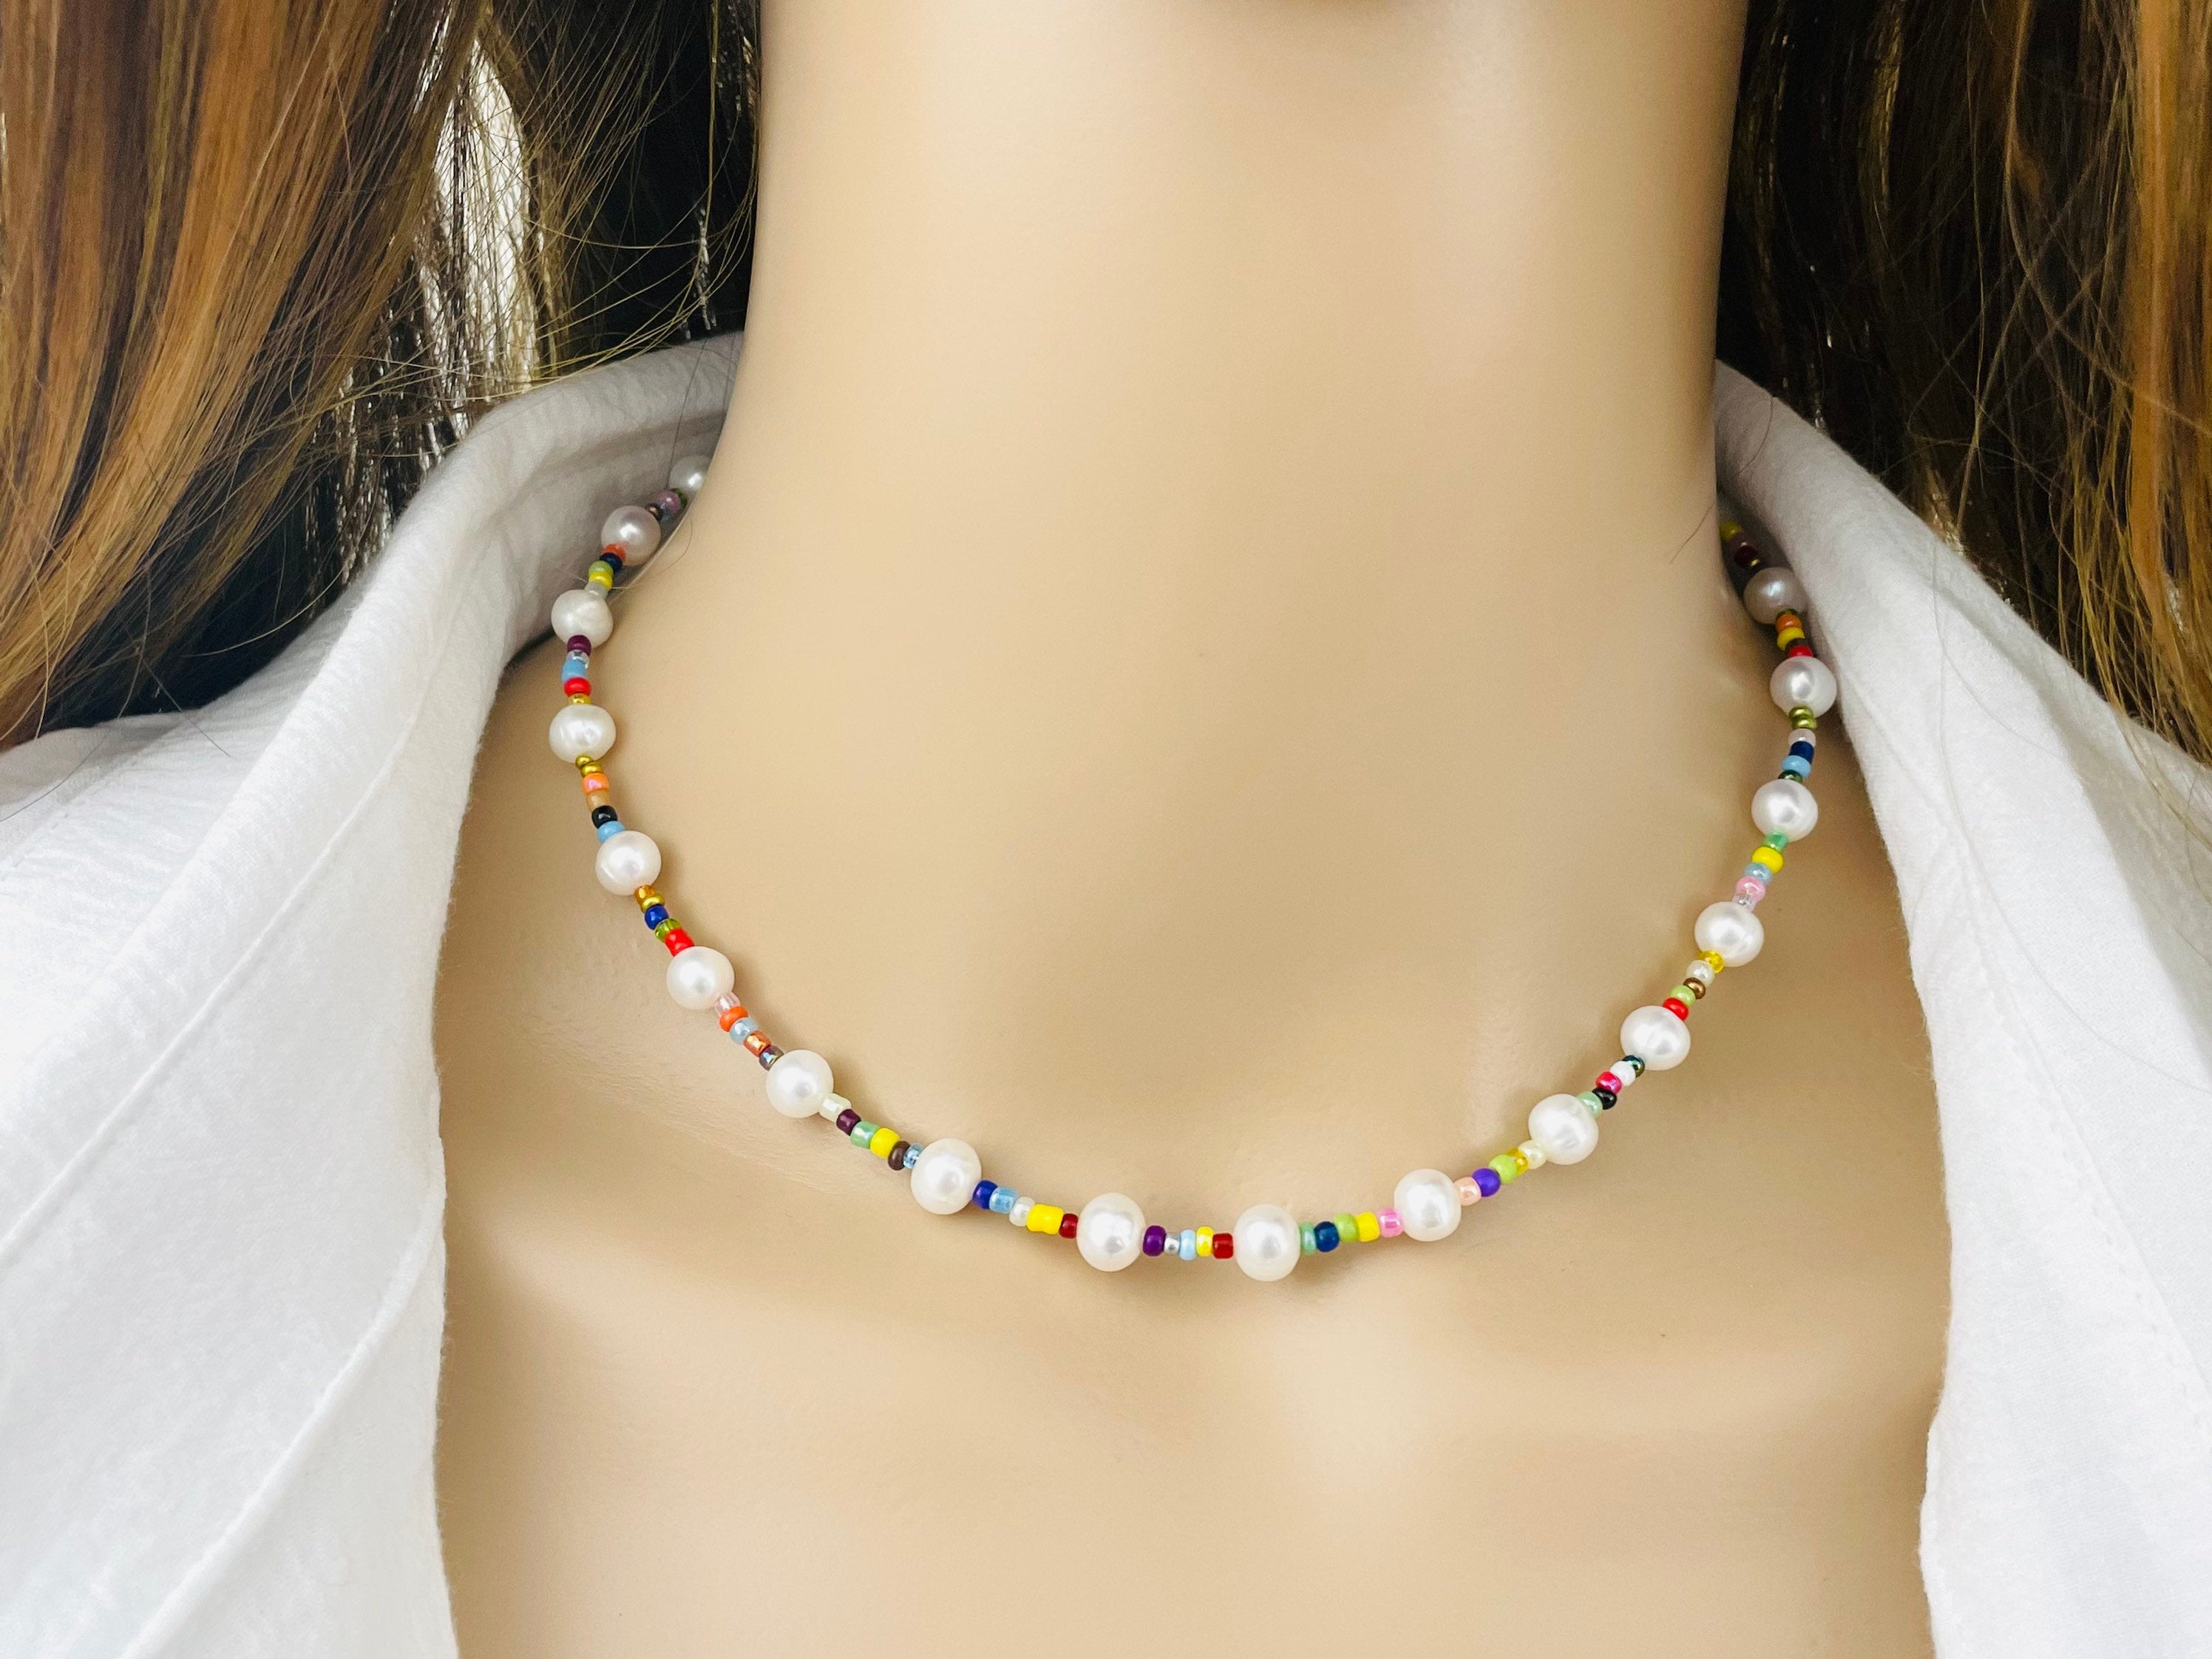 22 Rainbow Bead Foundation Necklace, Rainbow Beads - valleyresorts.co.uk